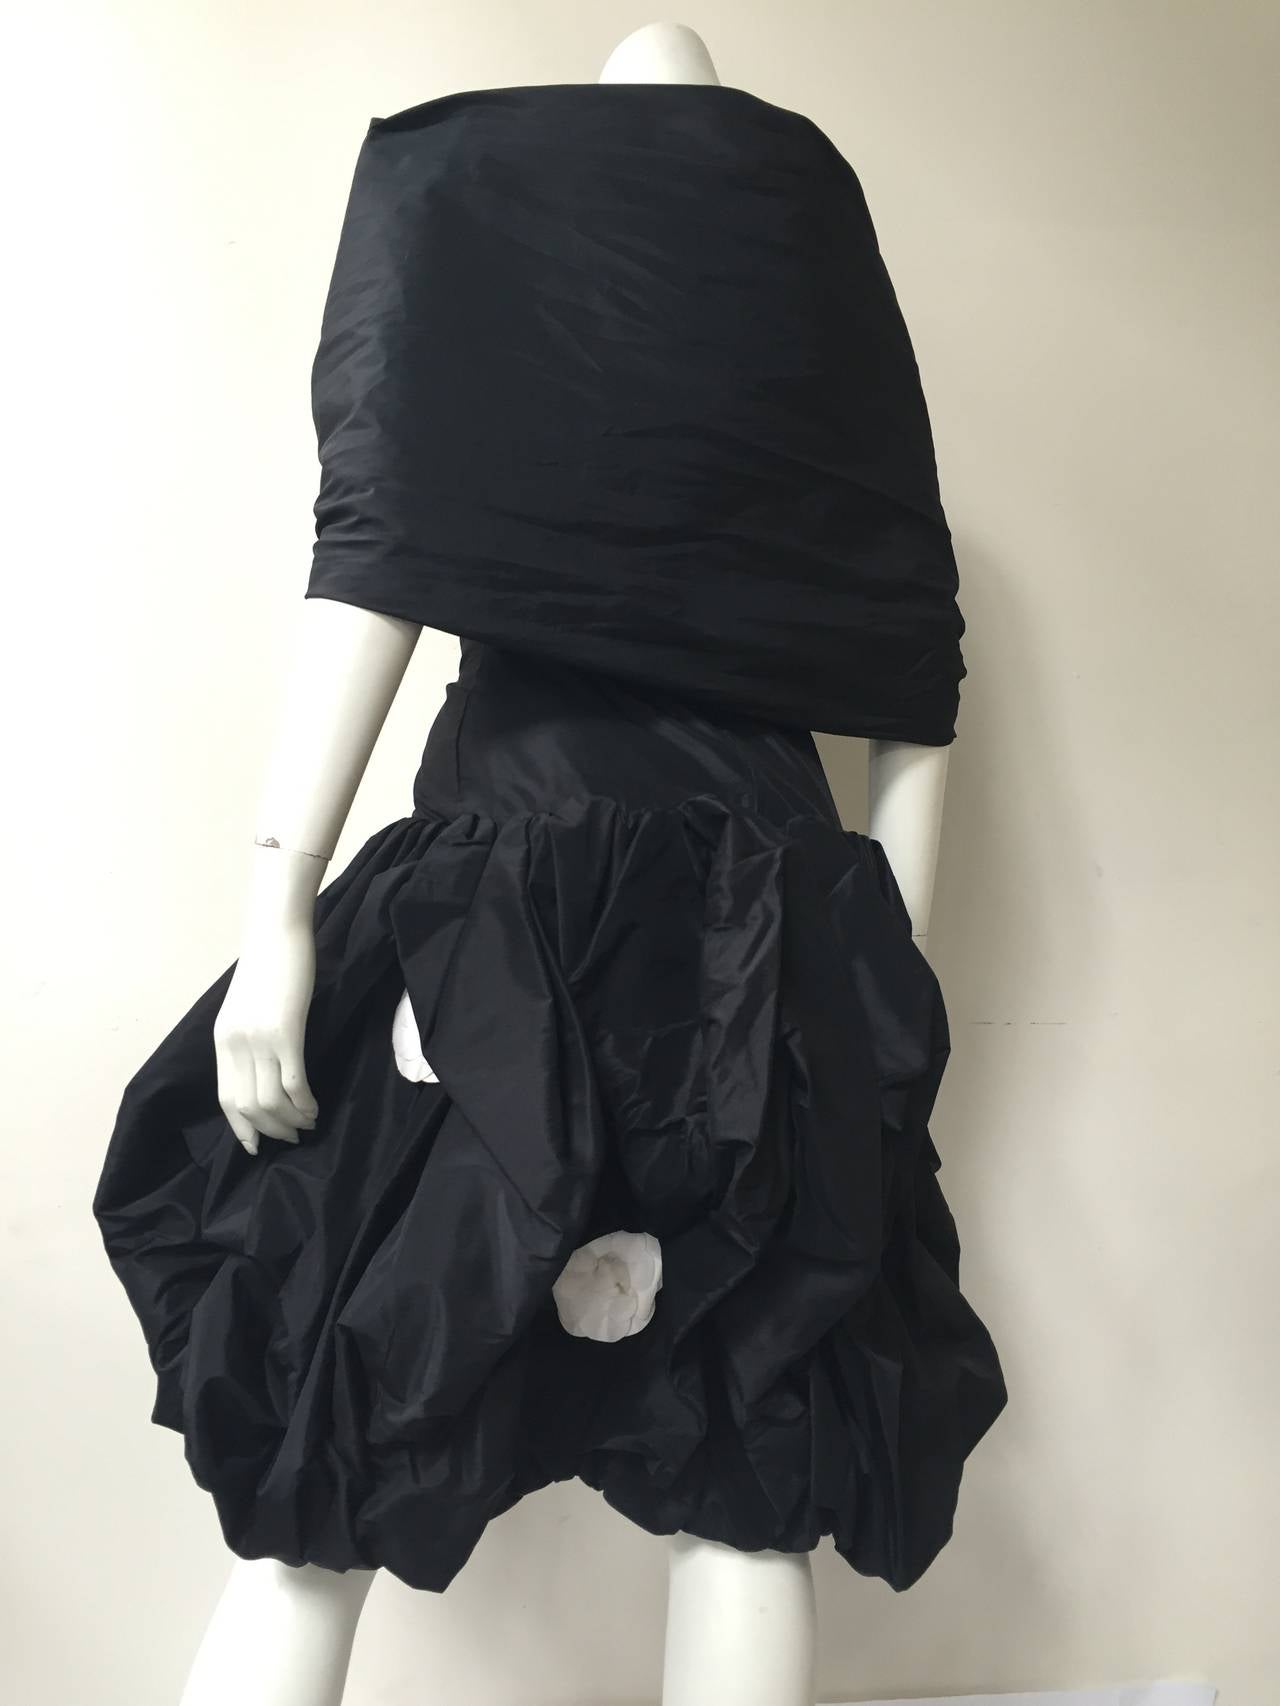 Bill Blass 60s Strapless Evening Dress Size 6. For Sale at 1stdibs